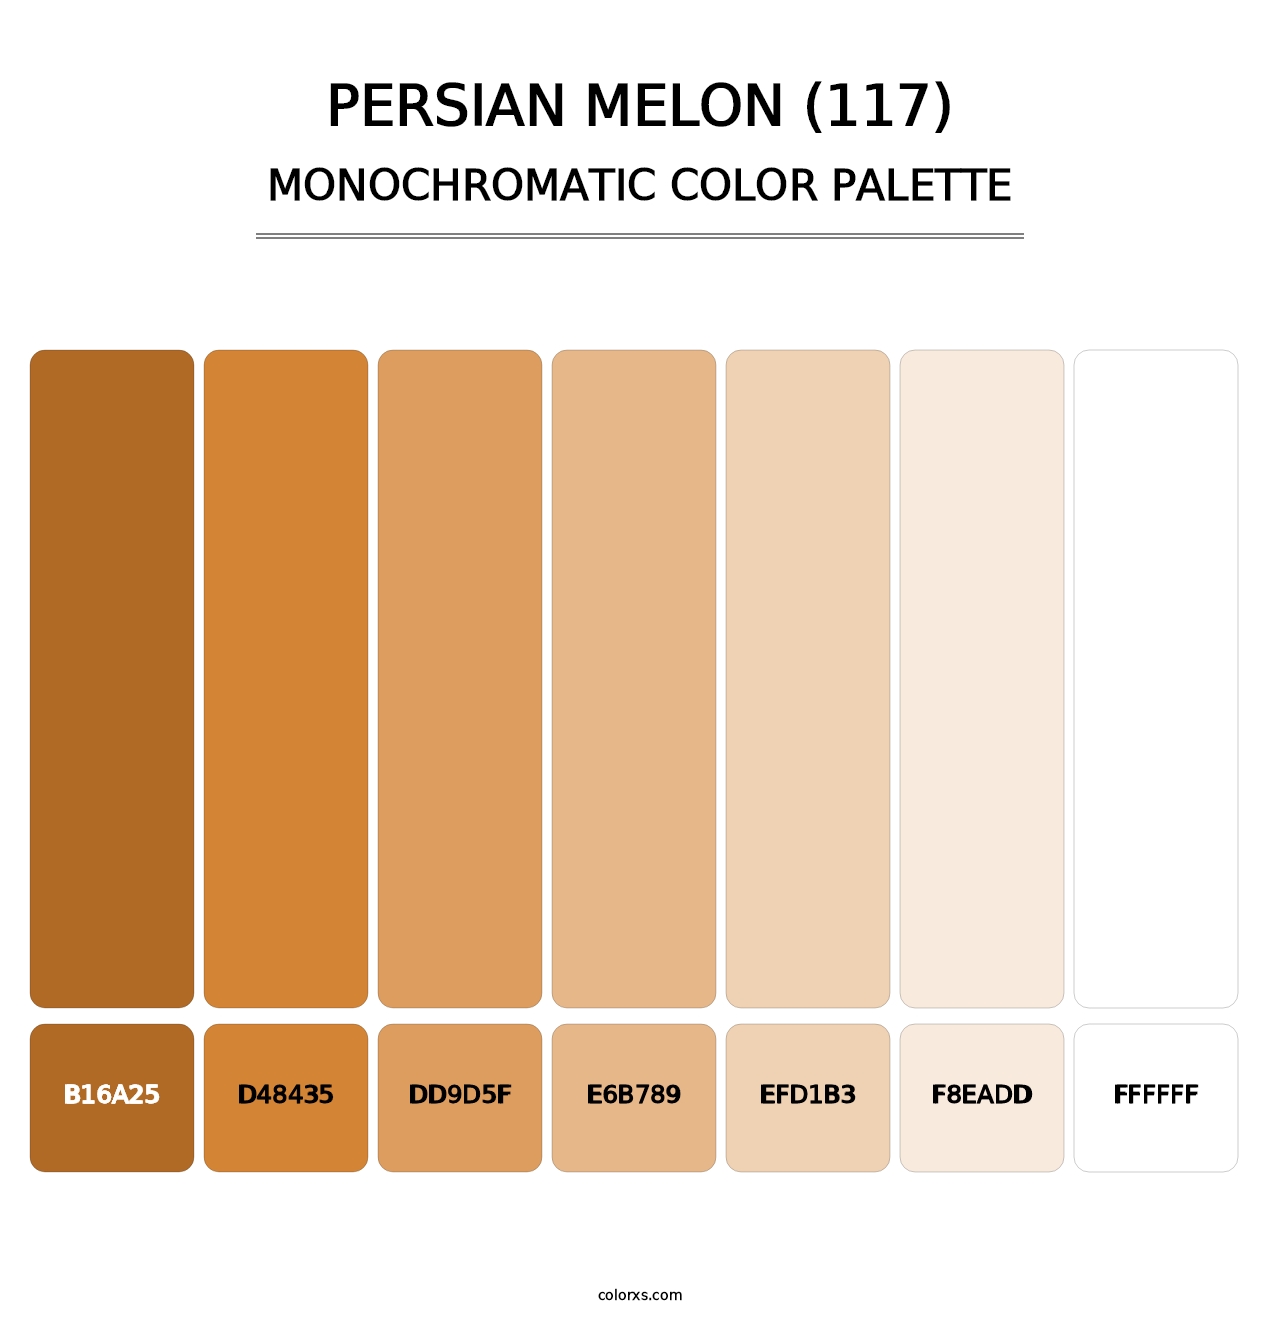 Persian Melon (117) - Monochromatic Color Palette